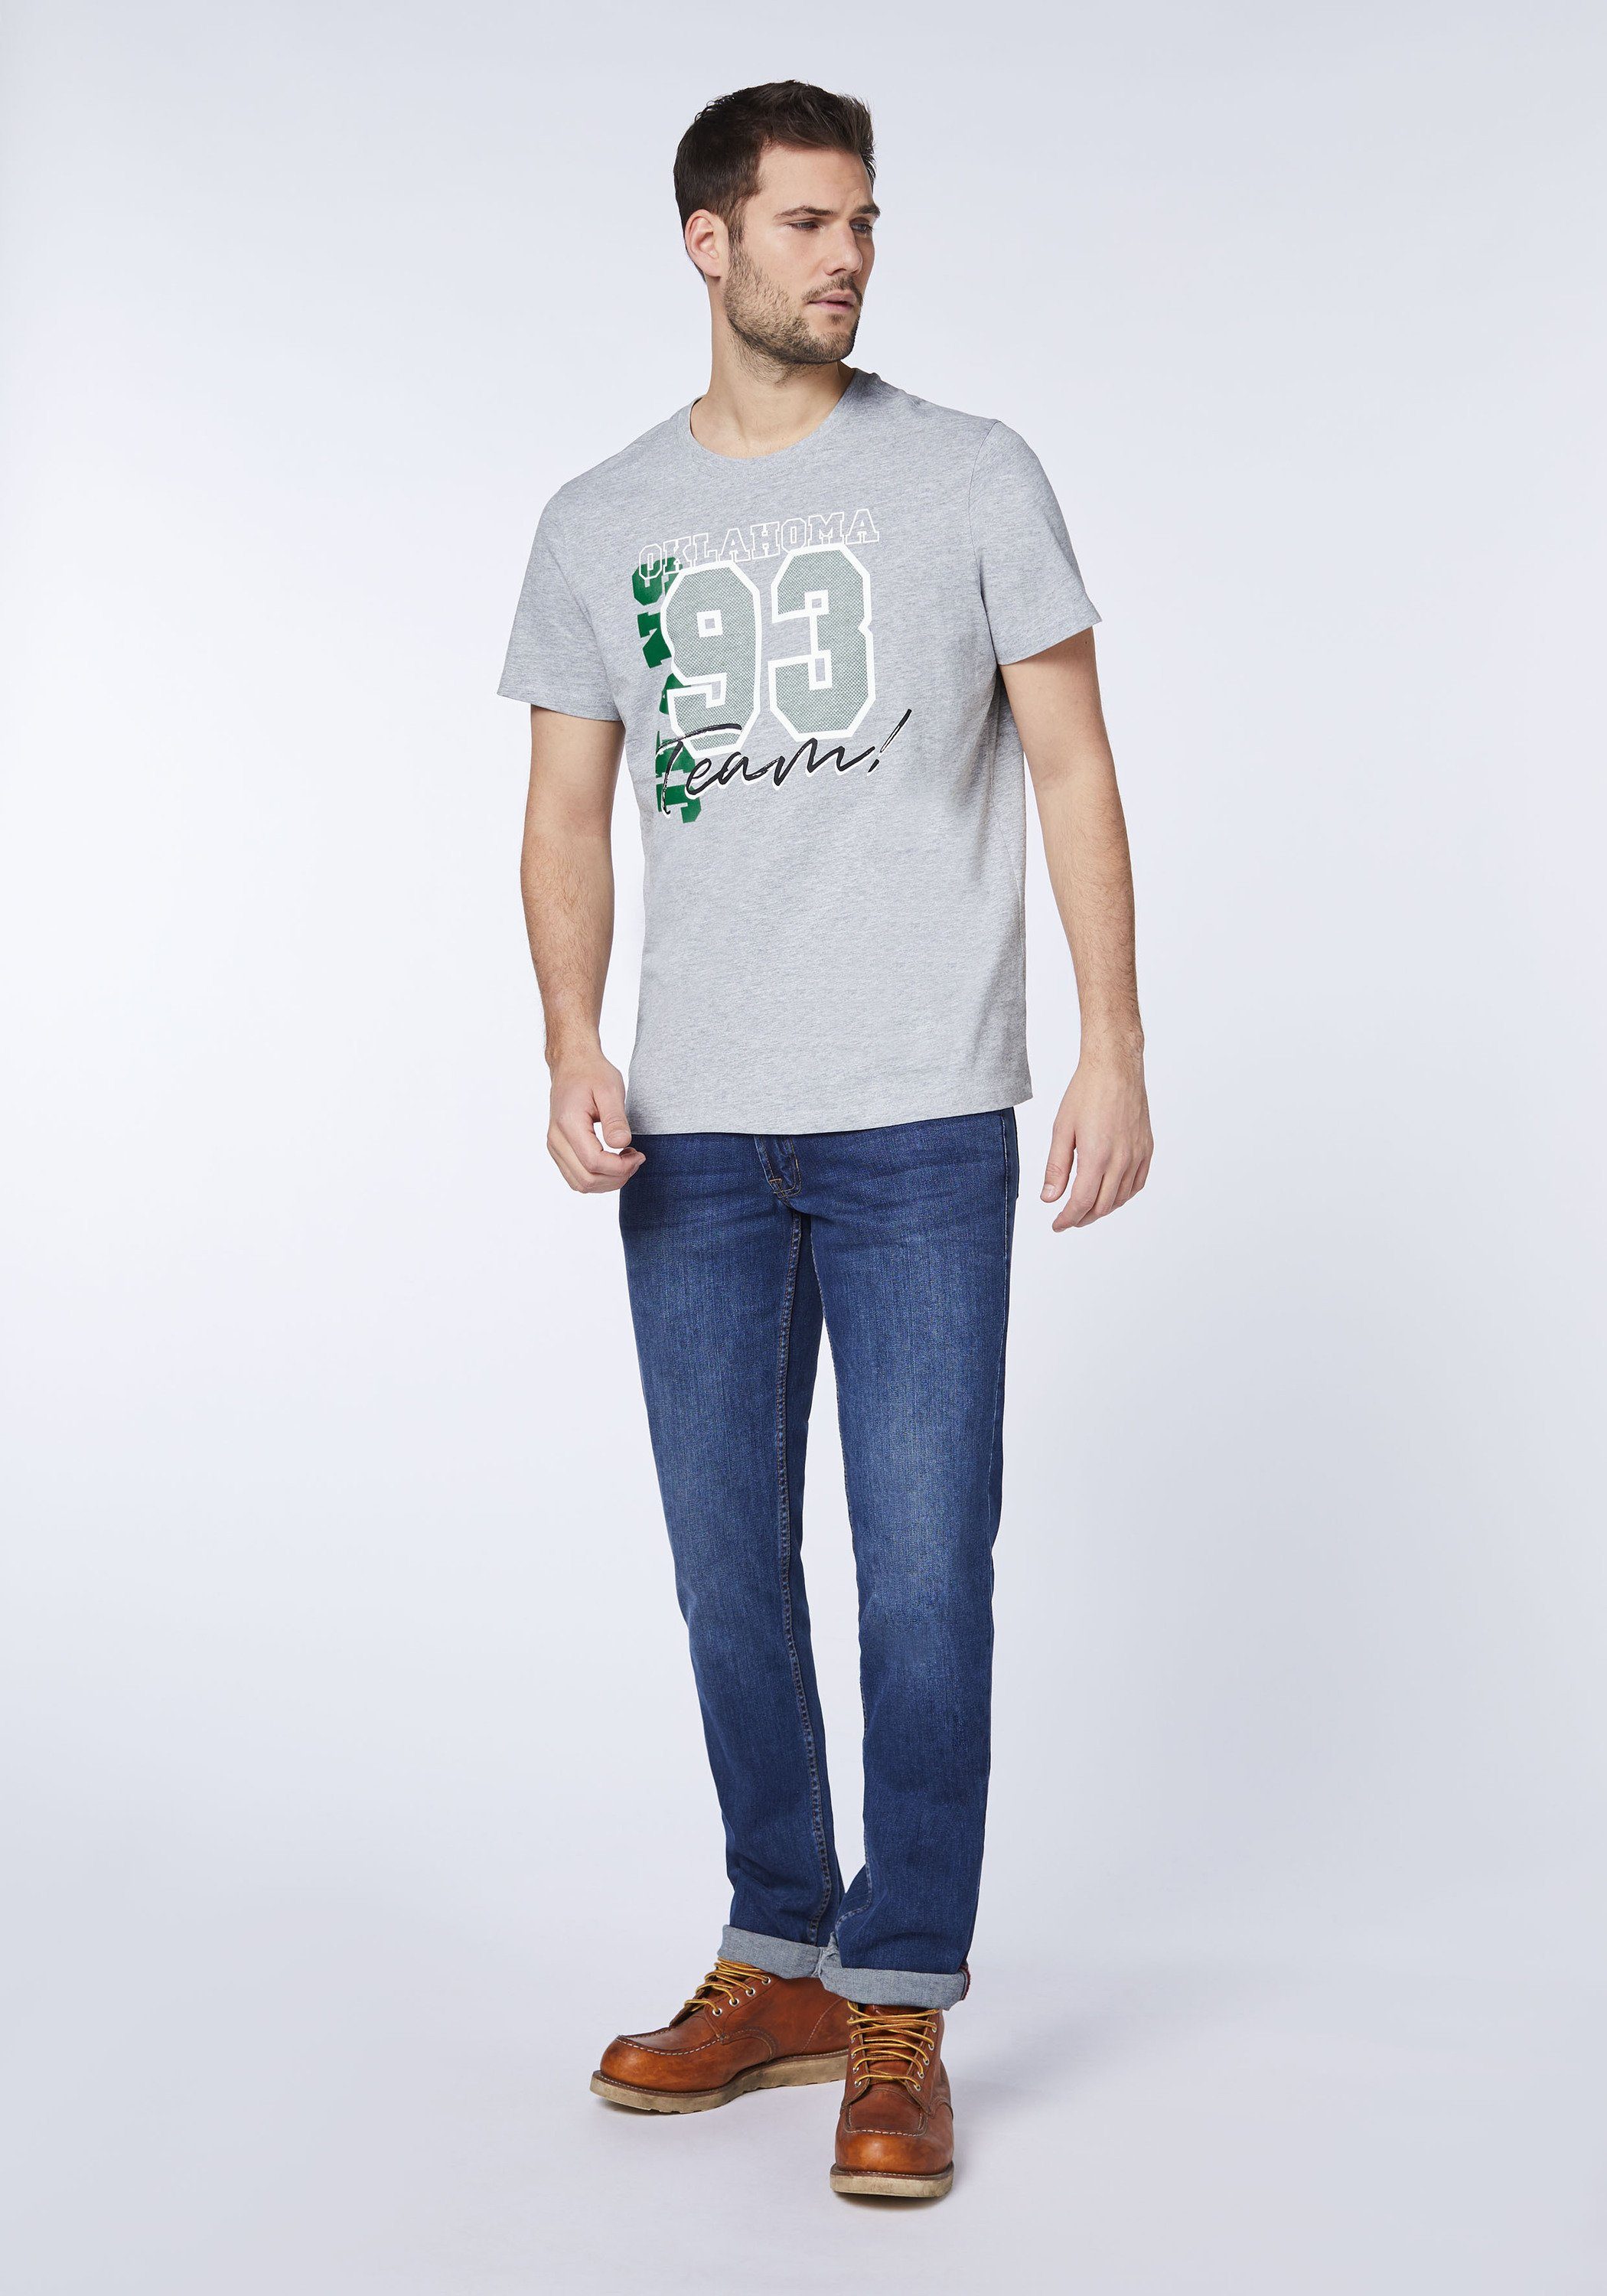 Print-Shirt Jeans Oklahoma Label-Trikot-Design Melange Gray 17-4402M Neutral im